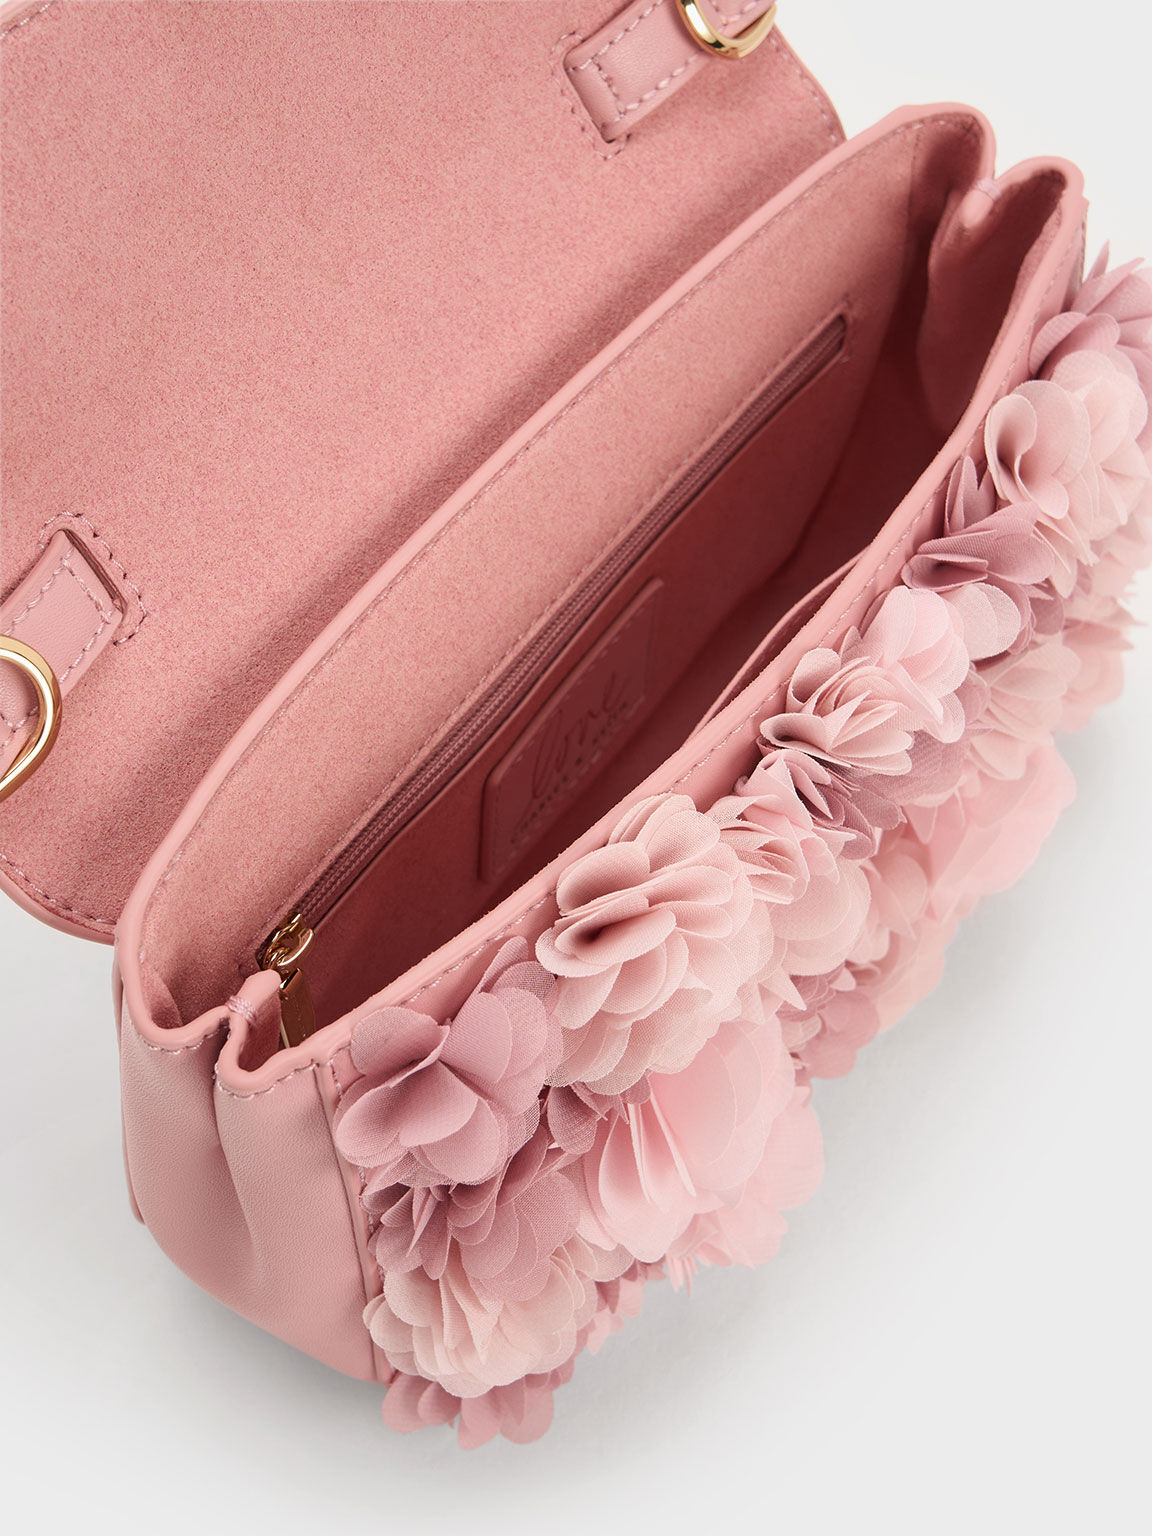 Floral Mesh Top Handle Bag, Pink, hi-res